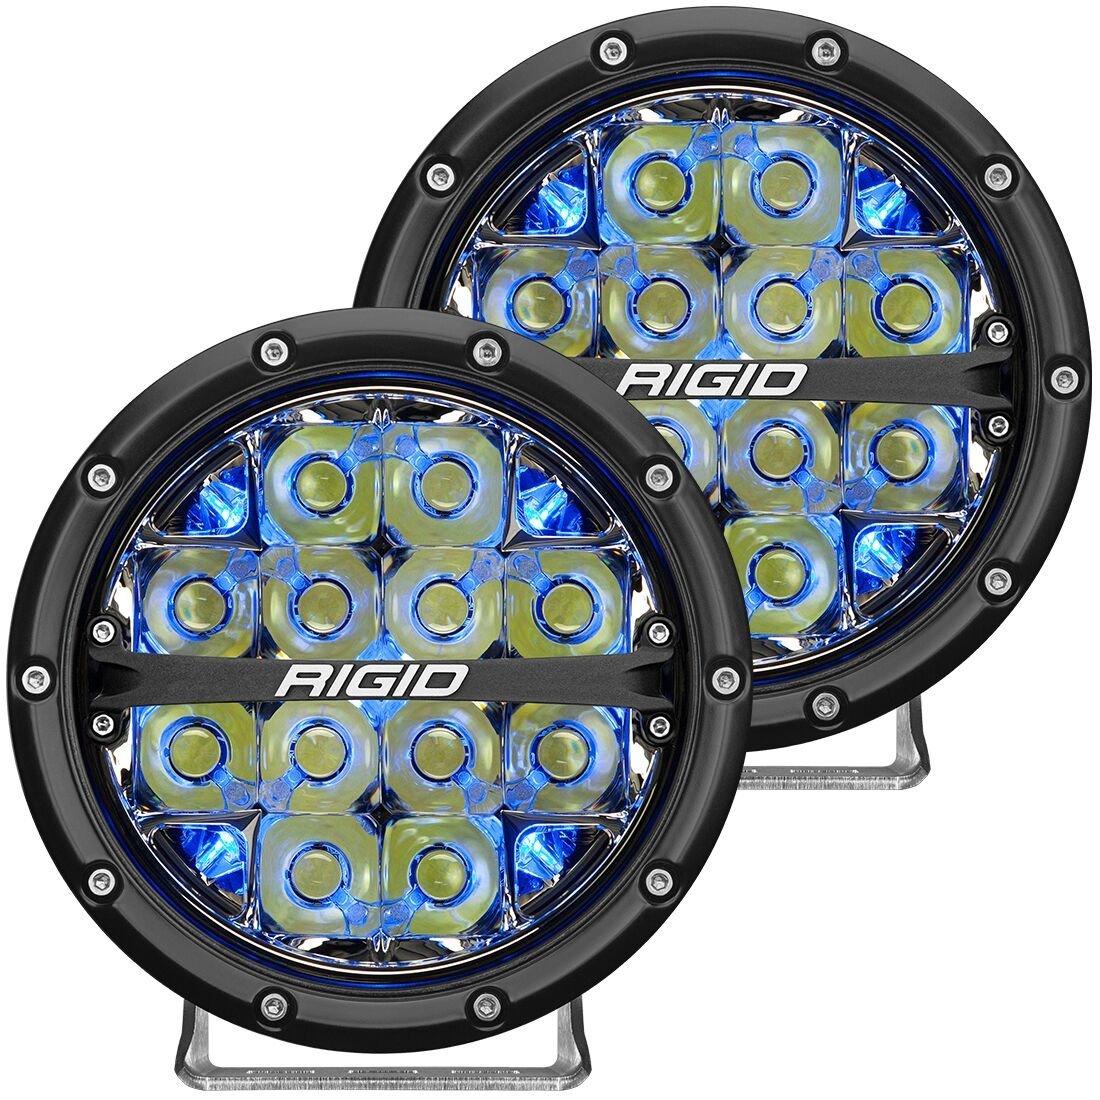 Rigid Industries 360-Series 6" Round LED Lights w/ Blue Spot Pattern - 36202